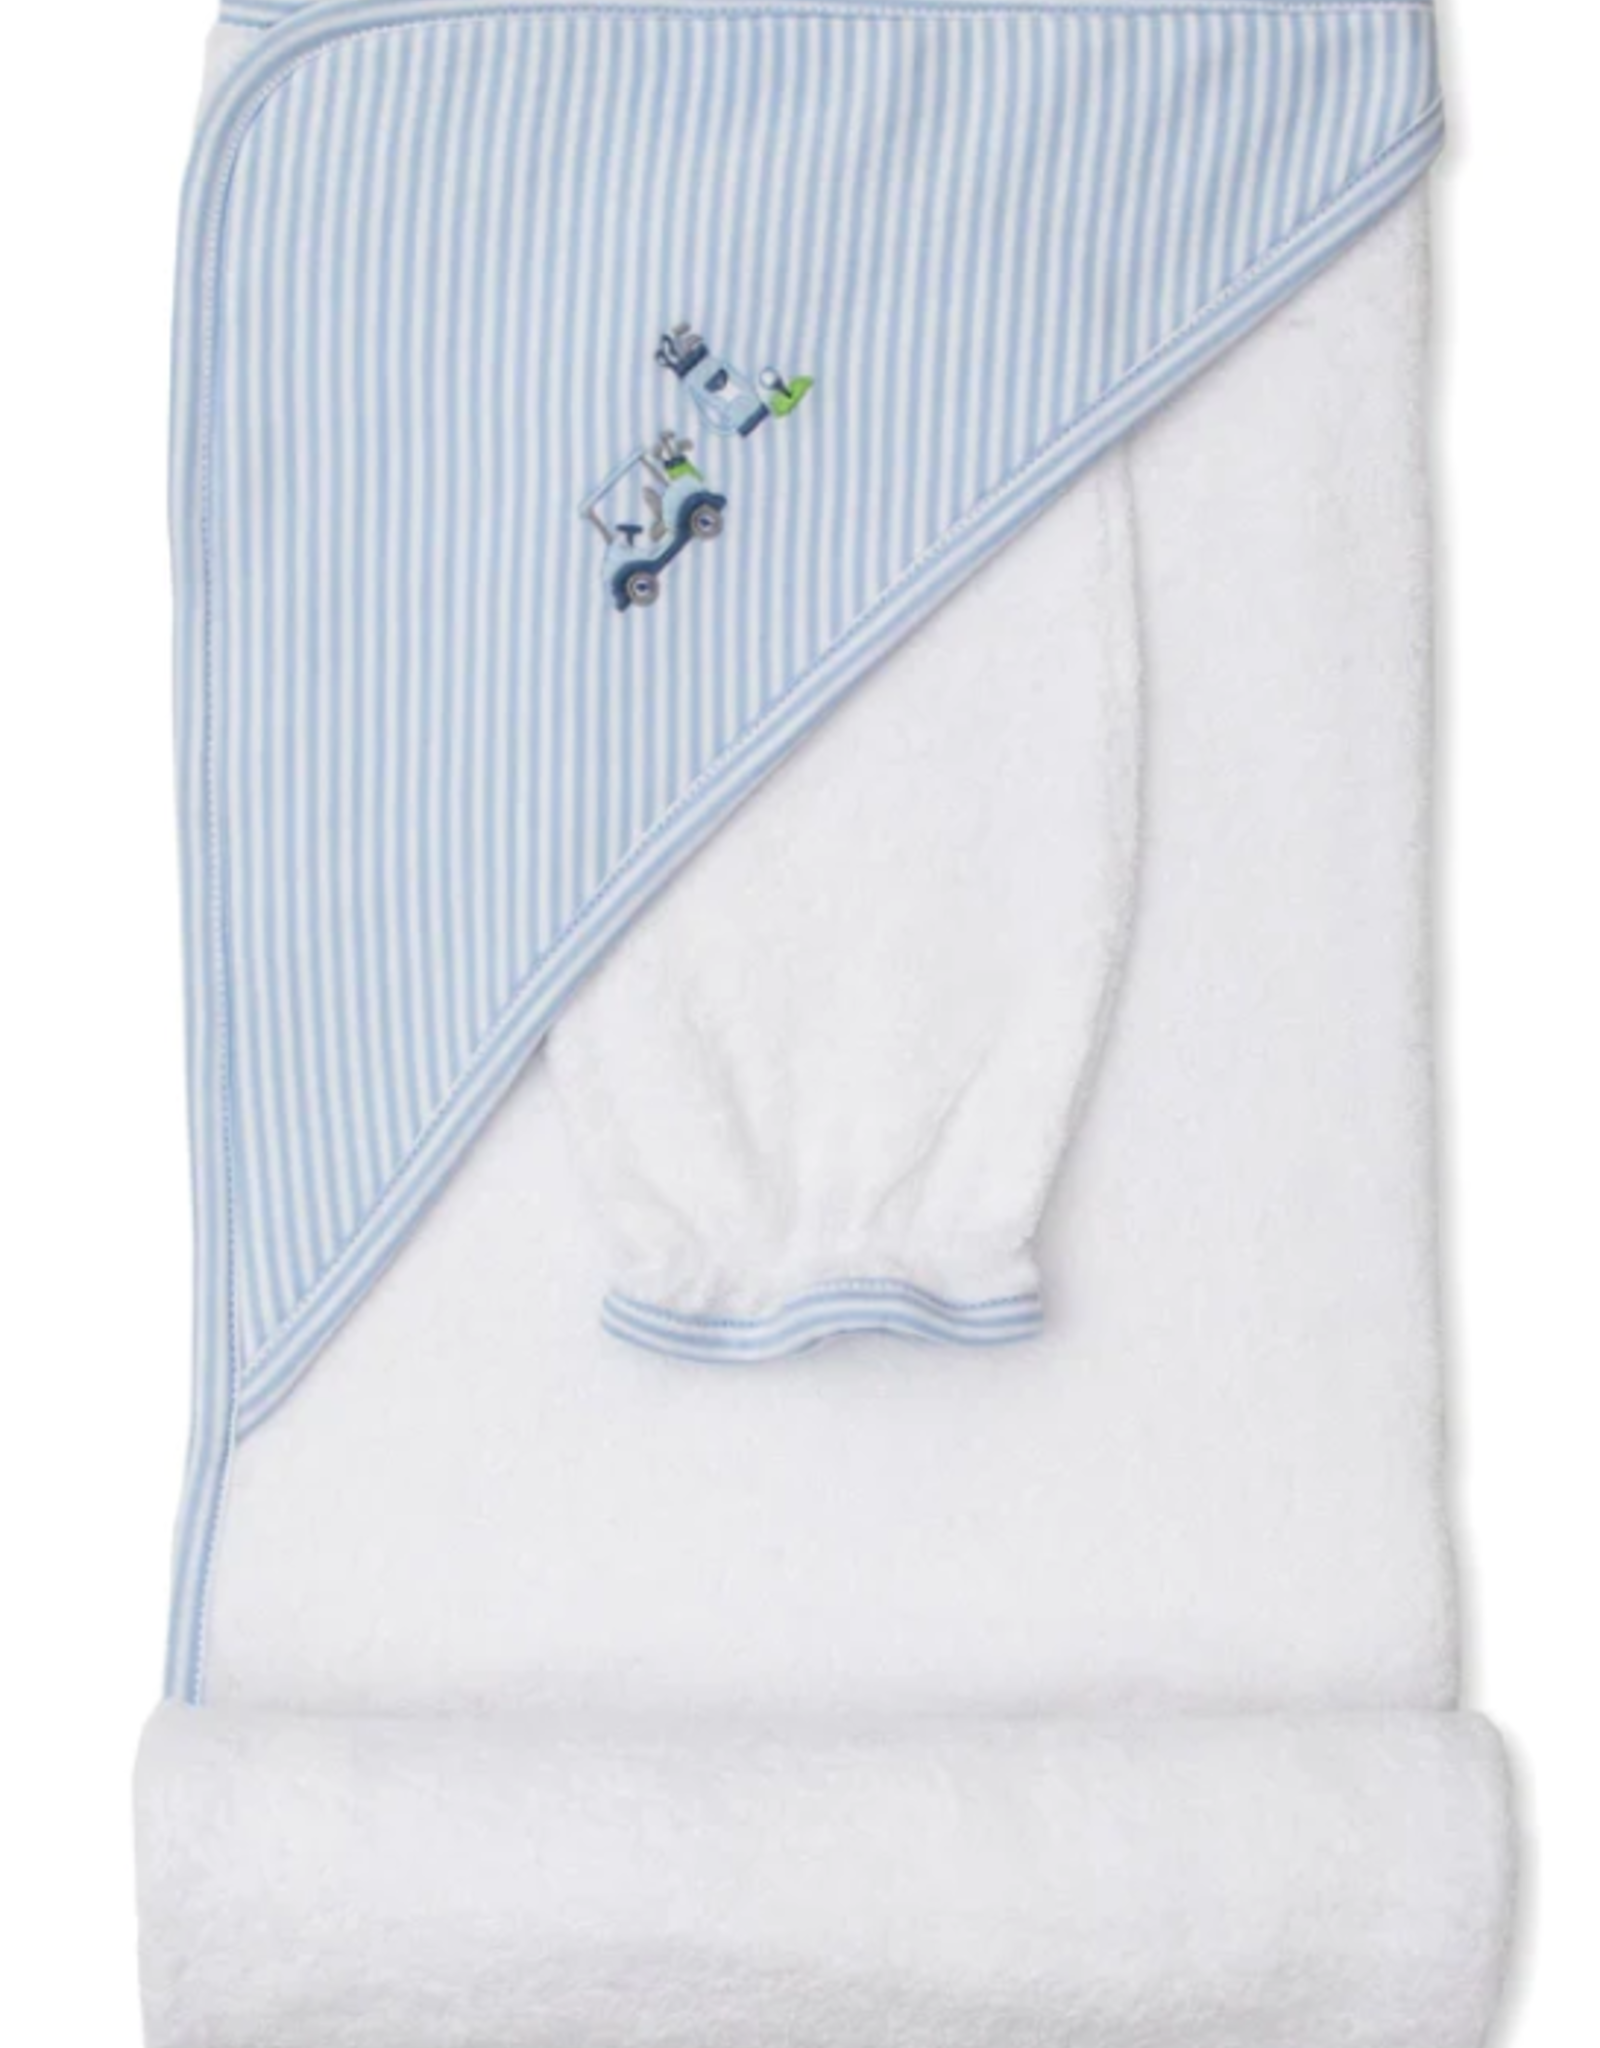 Kissy Kissy Light Blue Golf Embroidered Hooded Towel w/ Mitt Set